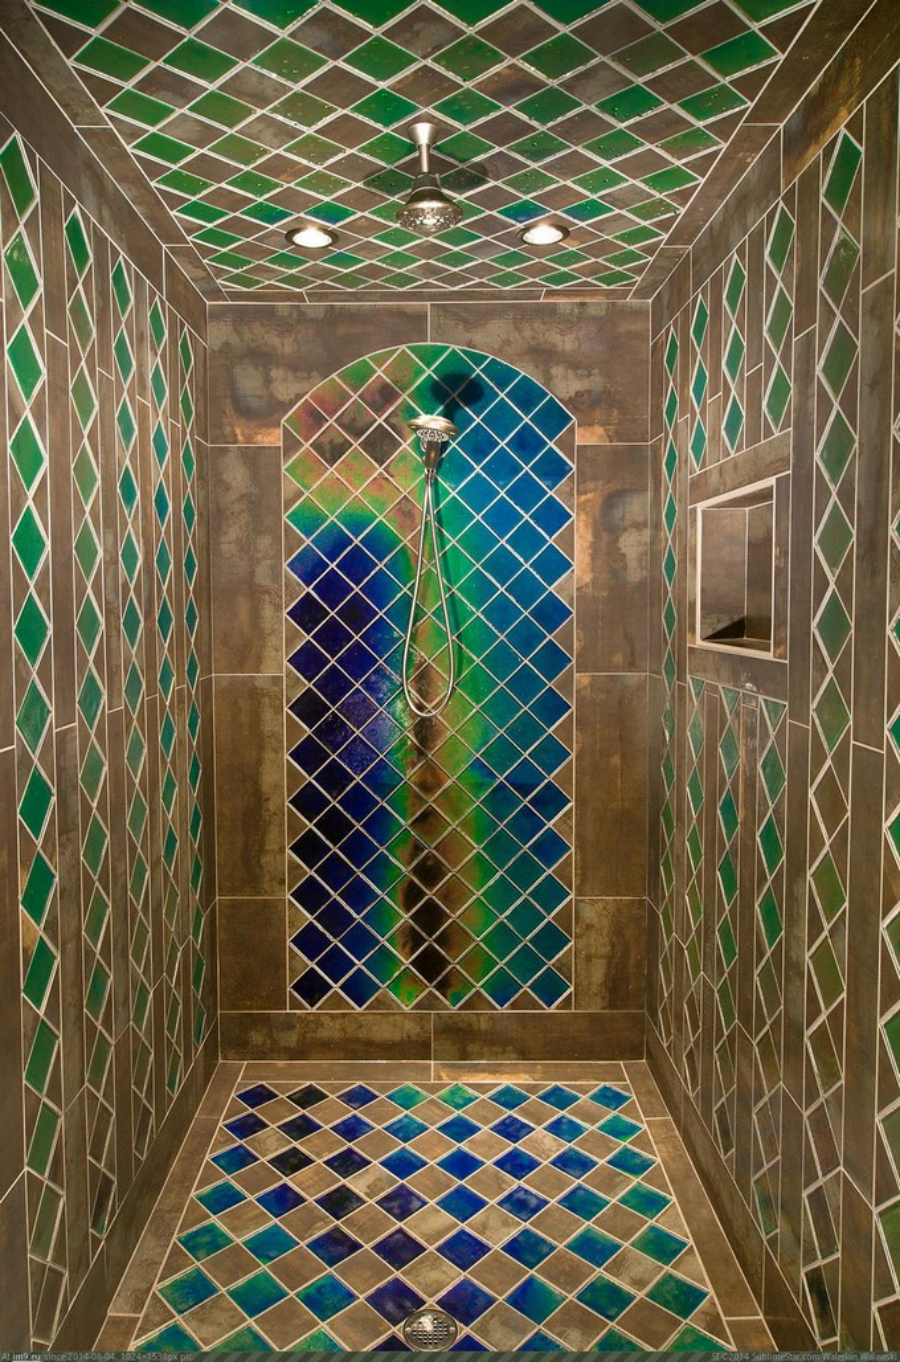 Luxury Bathroom Showers: 10 Ideas For An Opulent Home.Luxury Bathroom Showers: 10 Ideas For An Opulent Home. home inspiration ideas